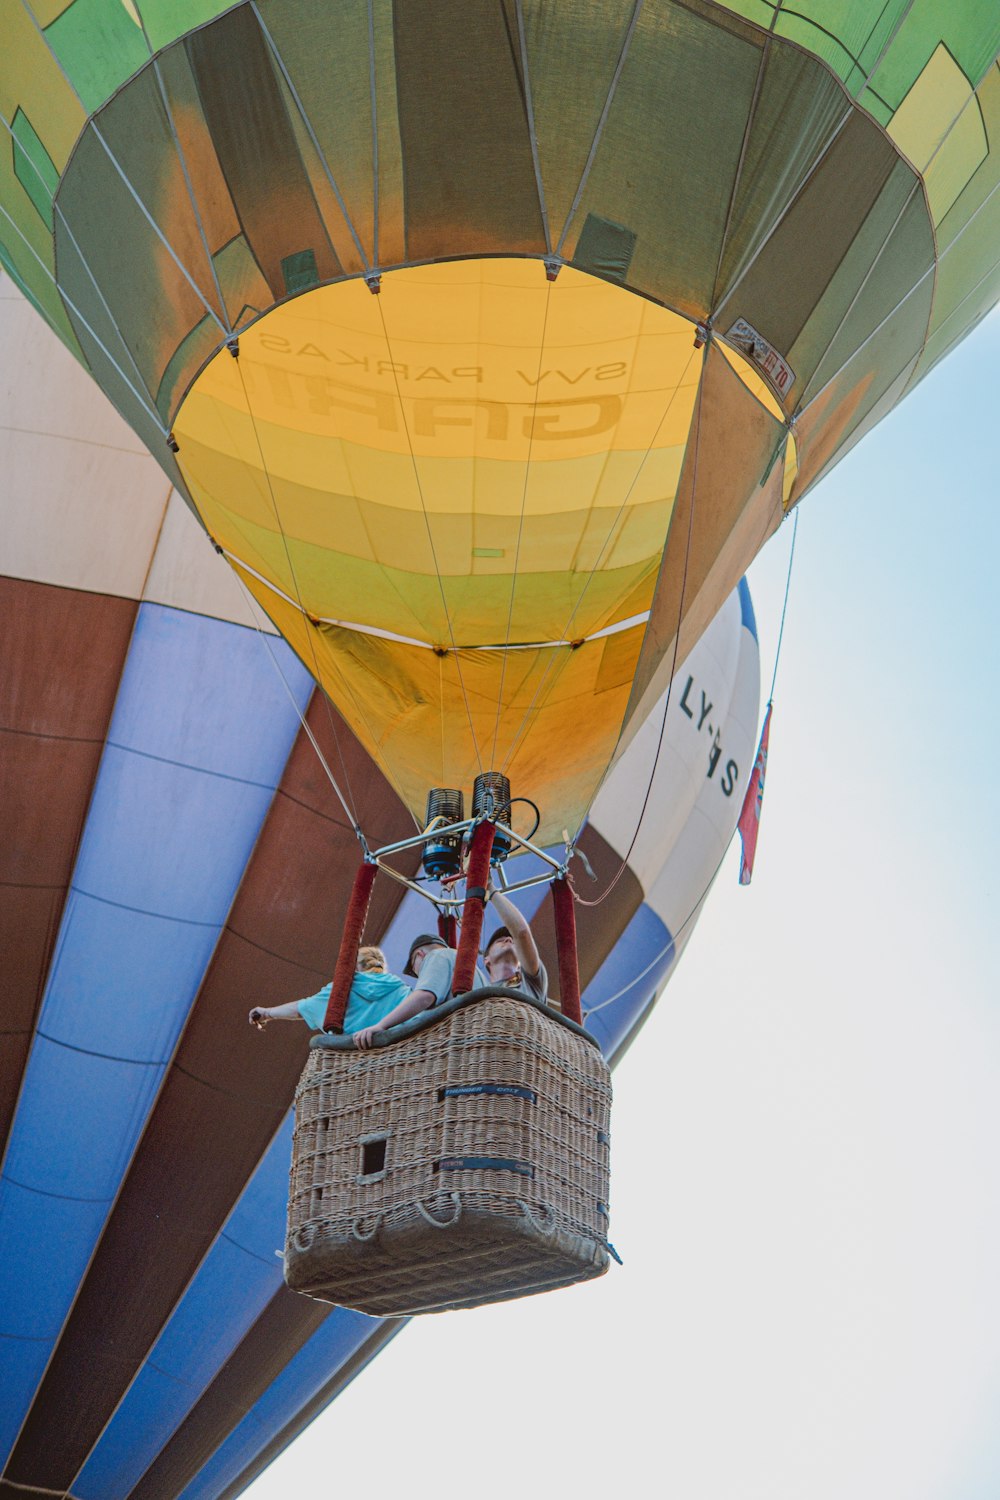 people riding hot air balloon during daytime